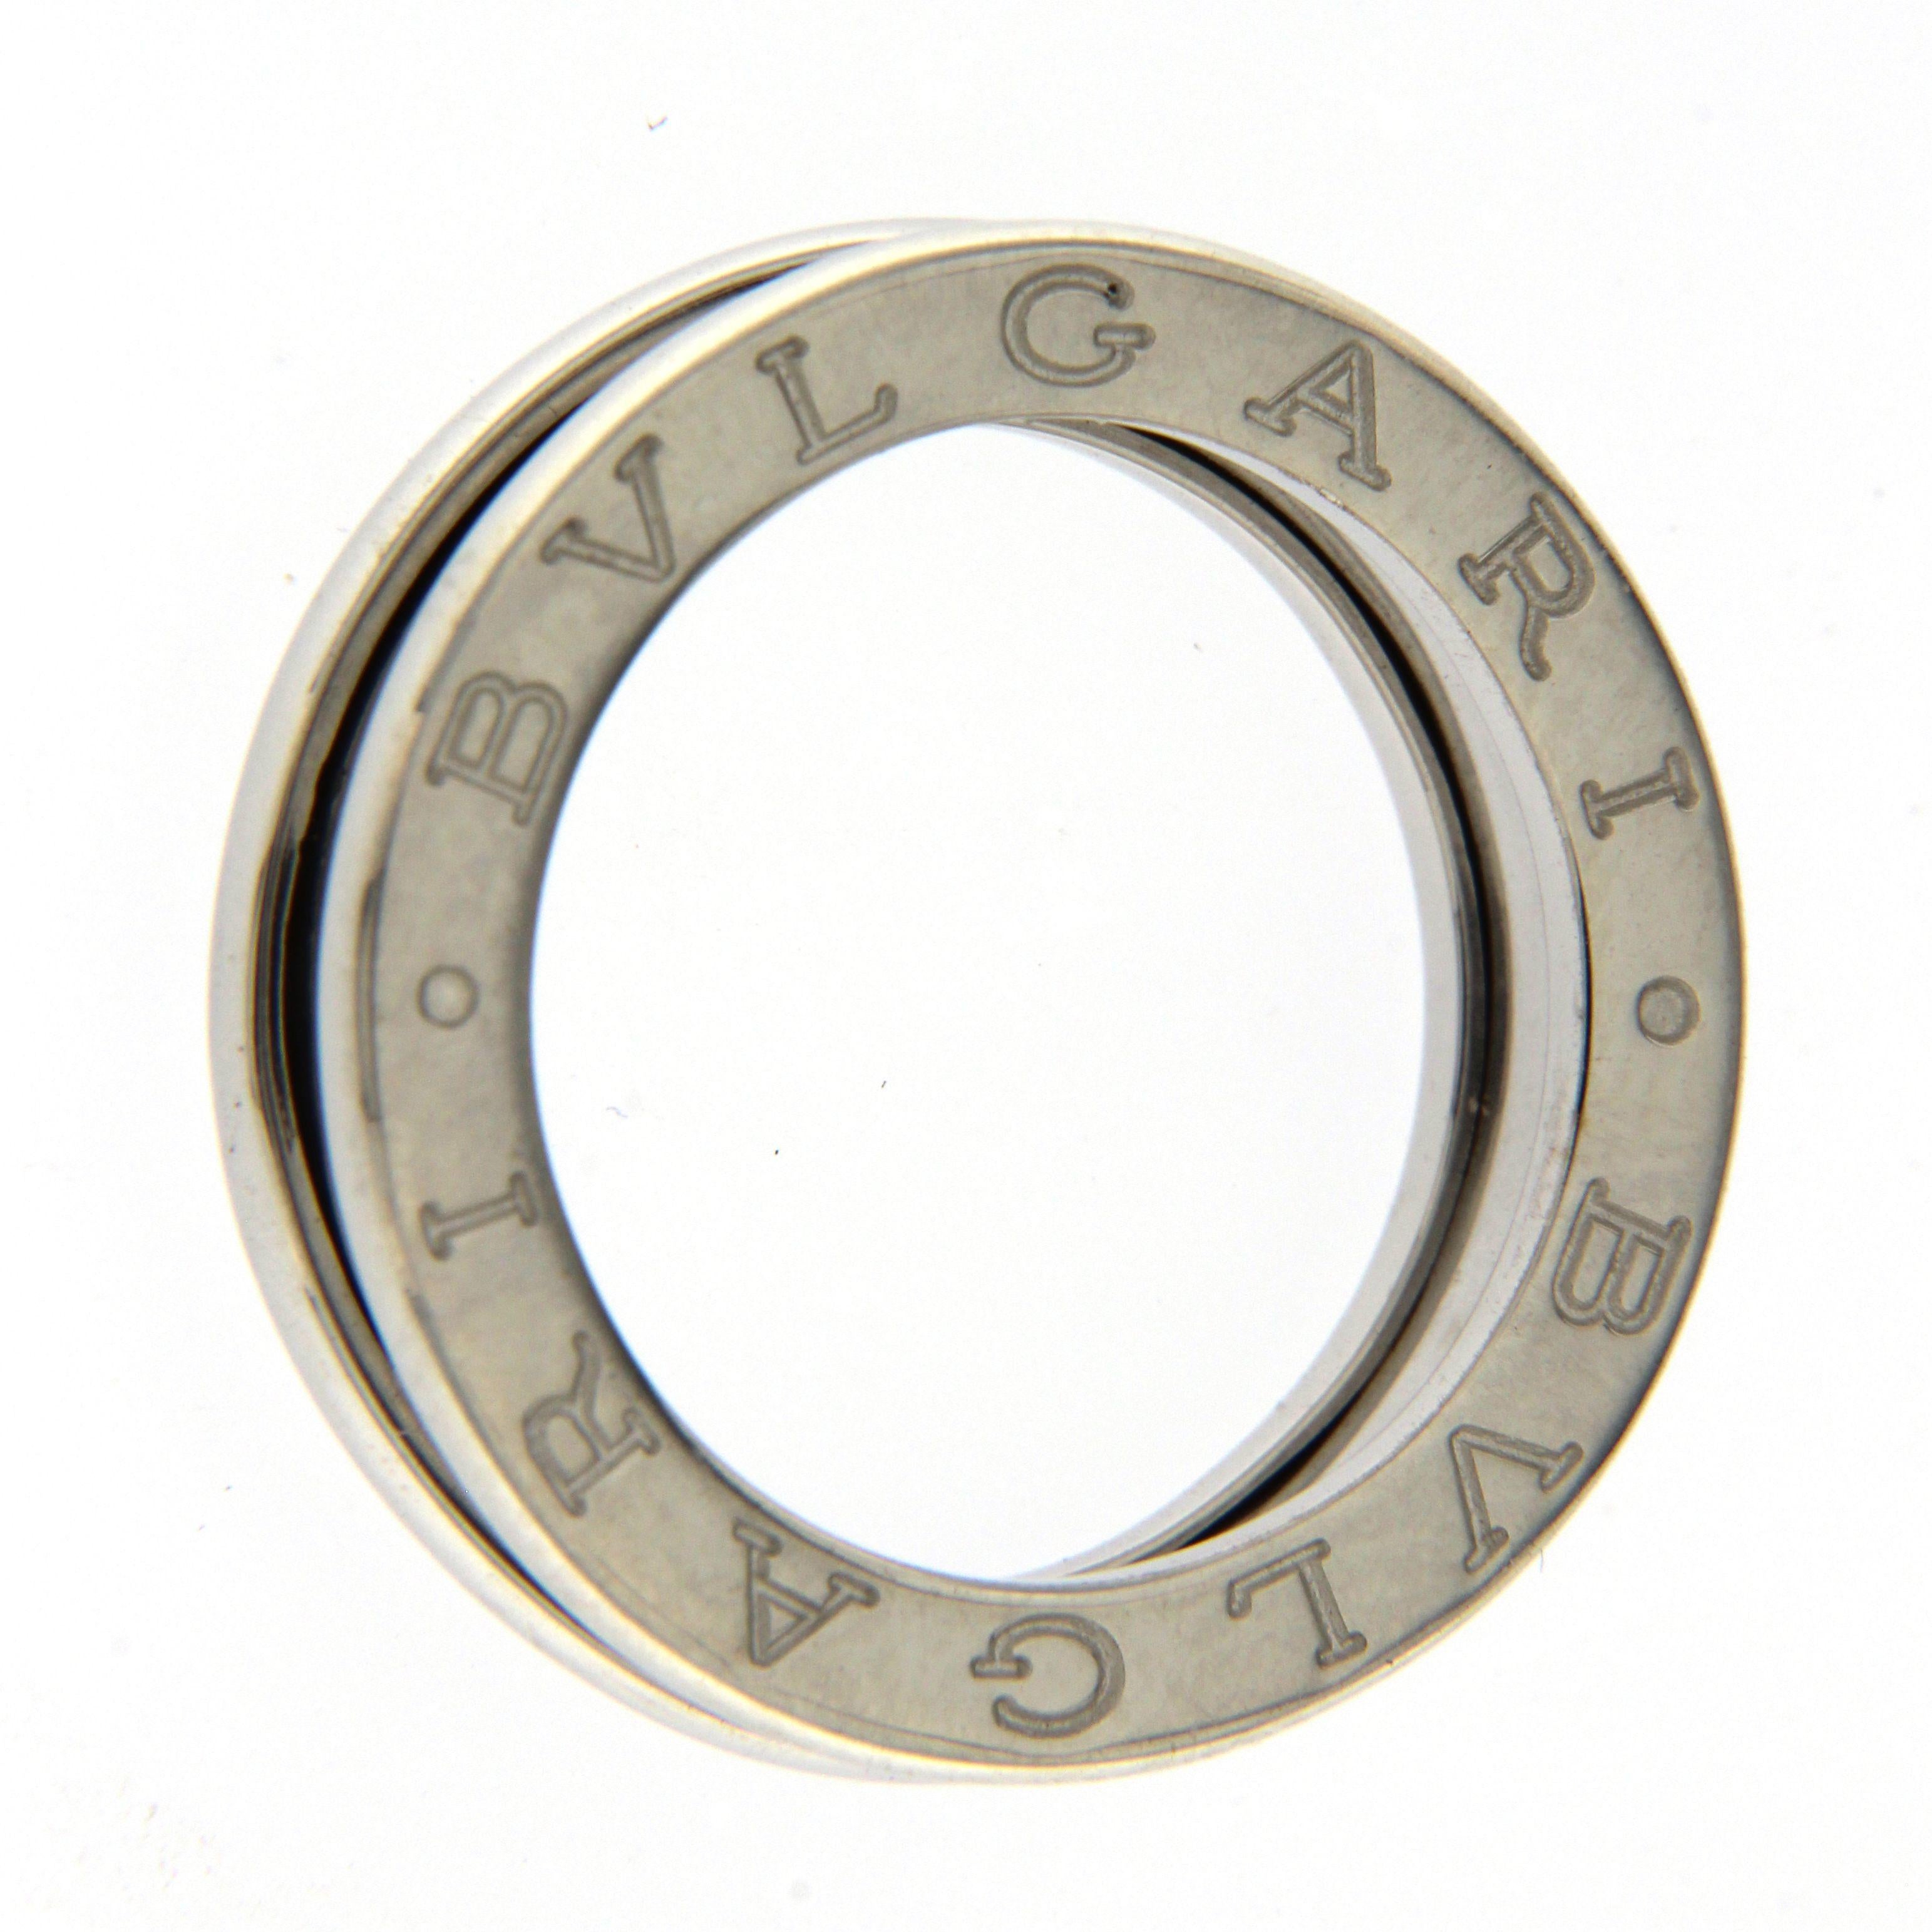 BZERO1 ring 18kt white gold       size 53       1 Band